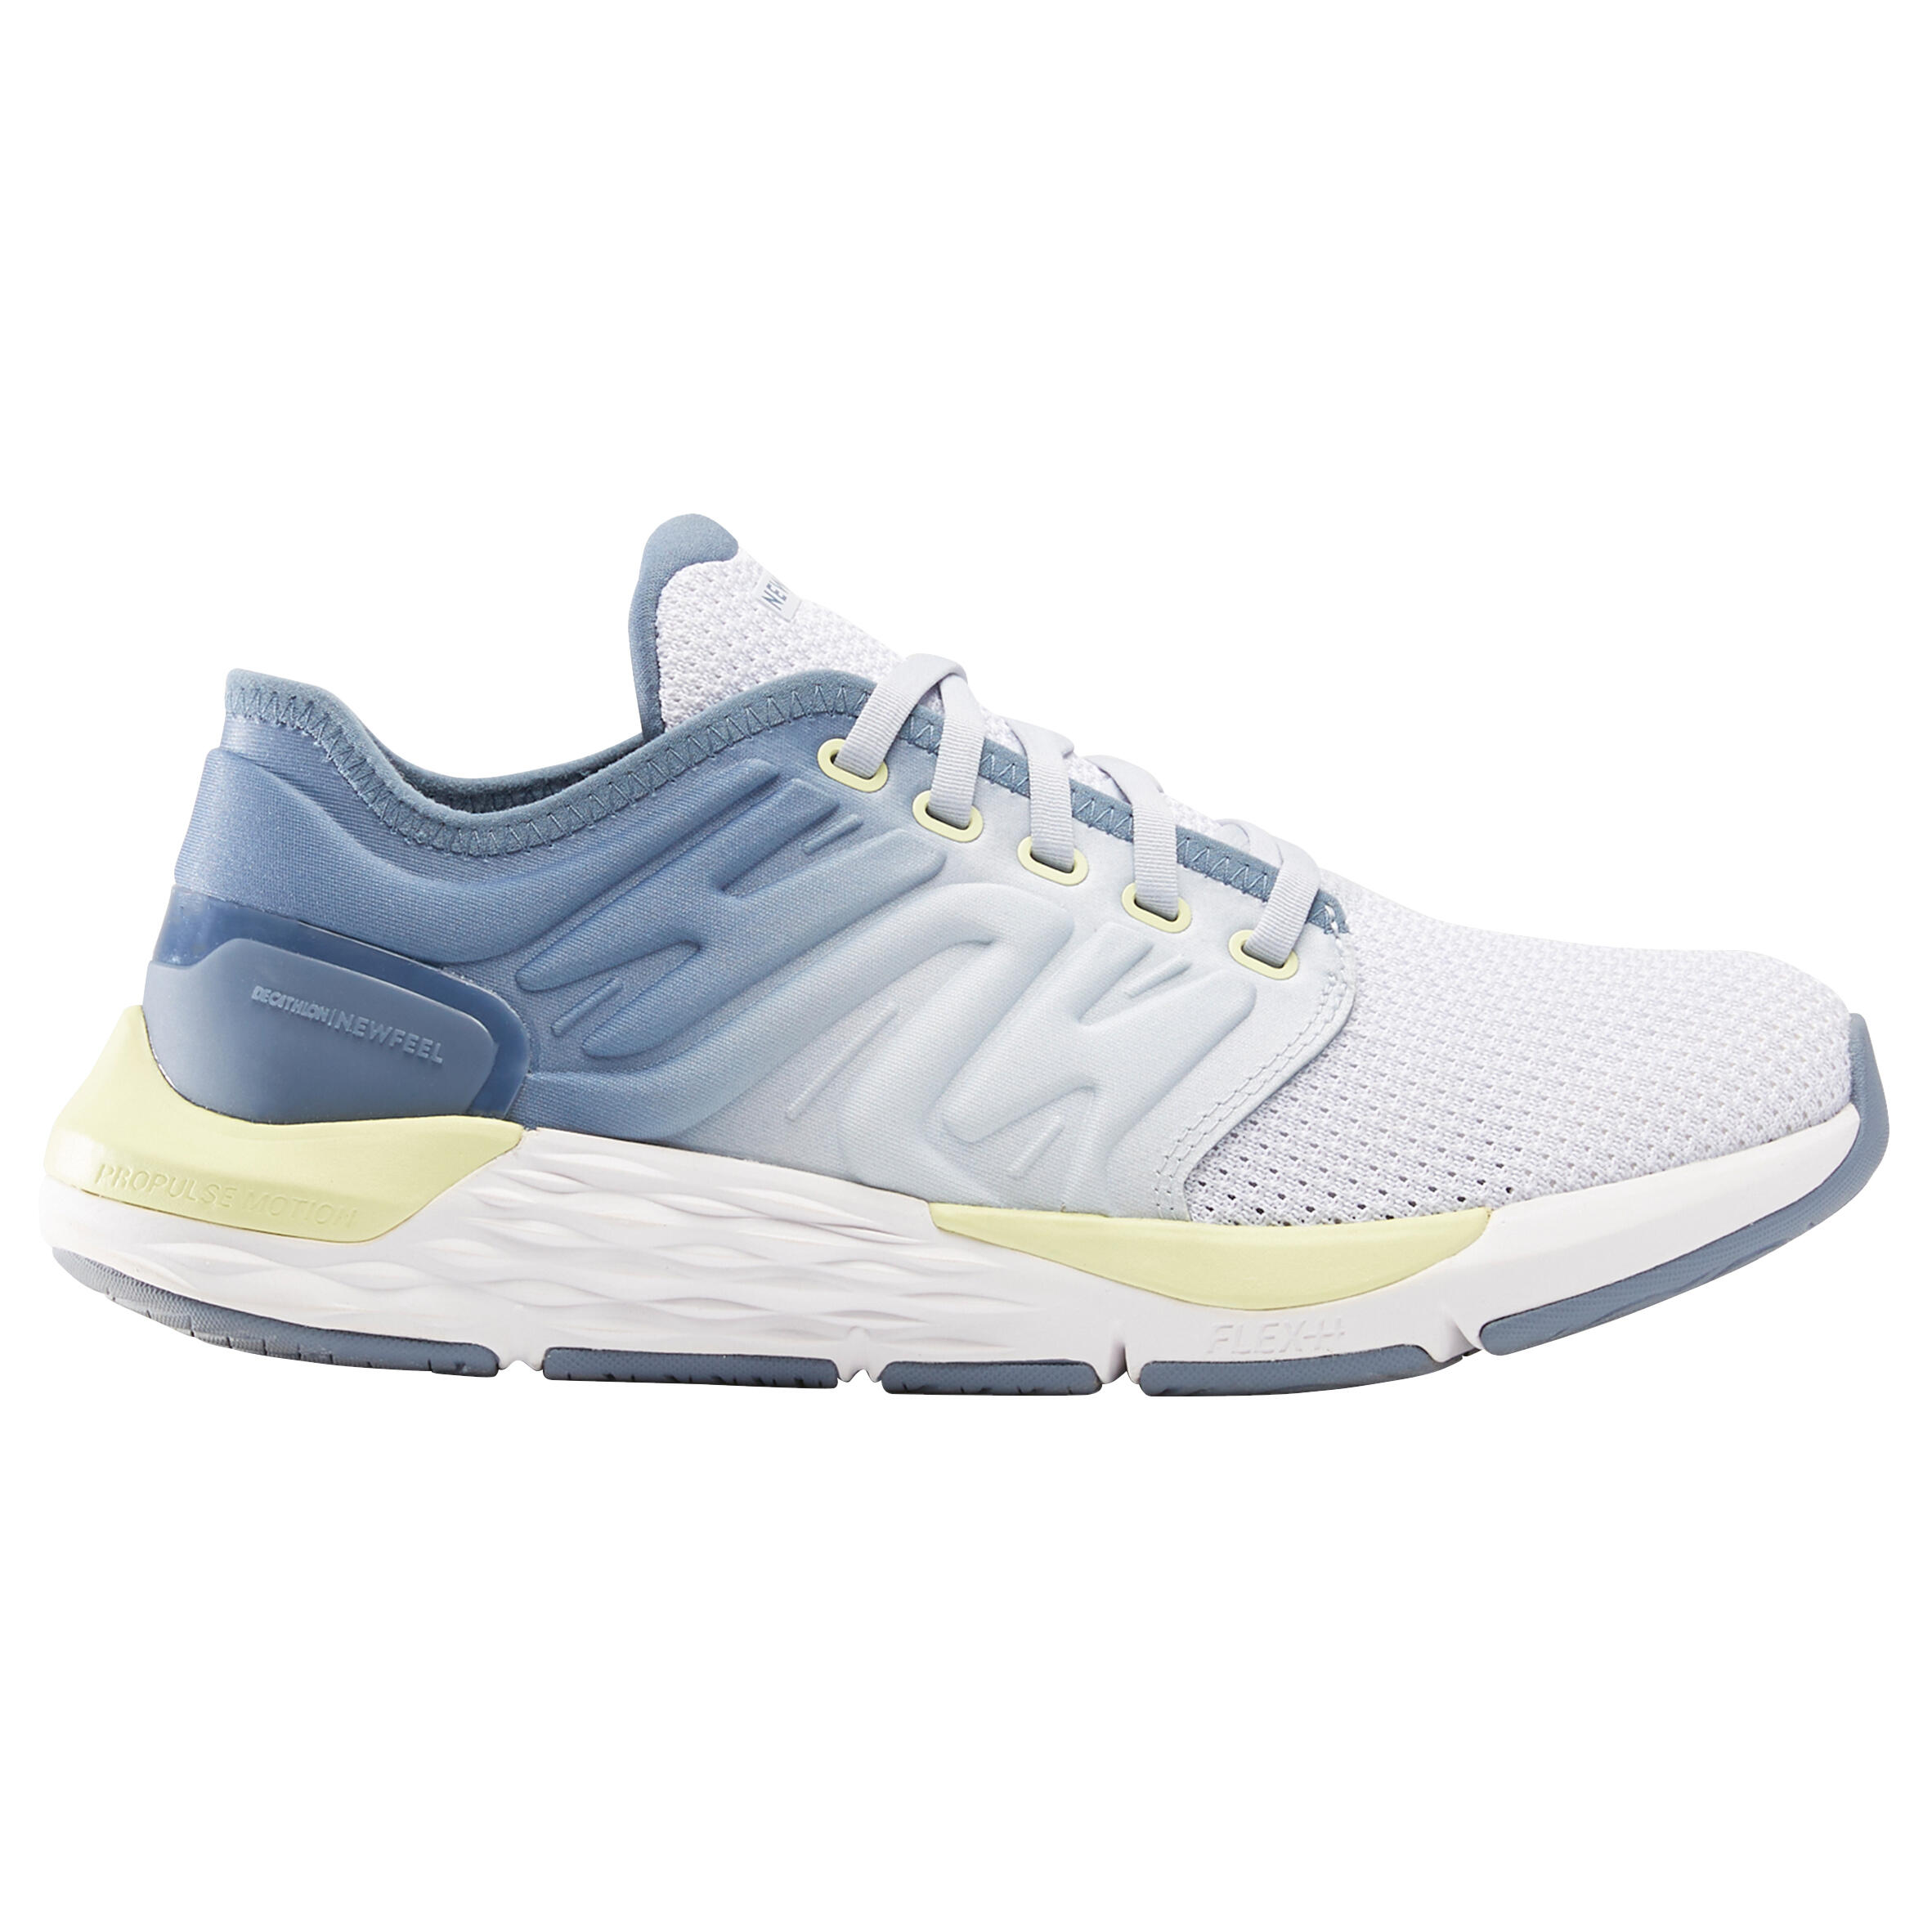 chaussures de marche sportive sportwalk confort bleu/gris - newfeel